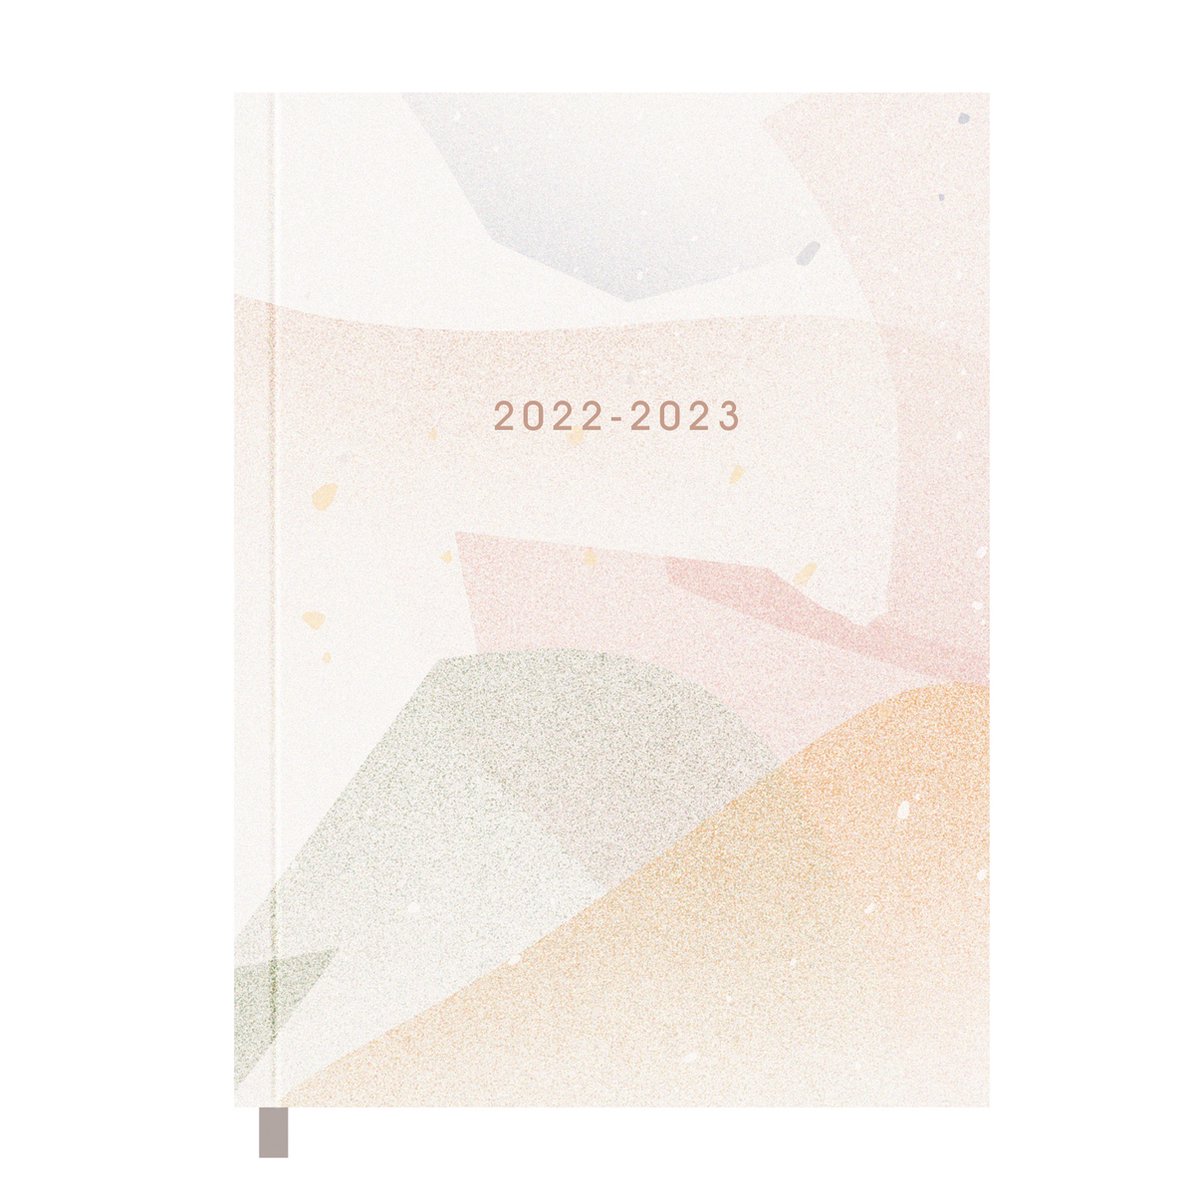 Hobbit - Agenda Pocket A6 - 2022/2023 - Abstracte kleuren - Week per 2 pagina's - Hardcover - 14x10,5cm (A6)